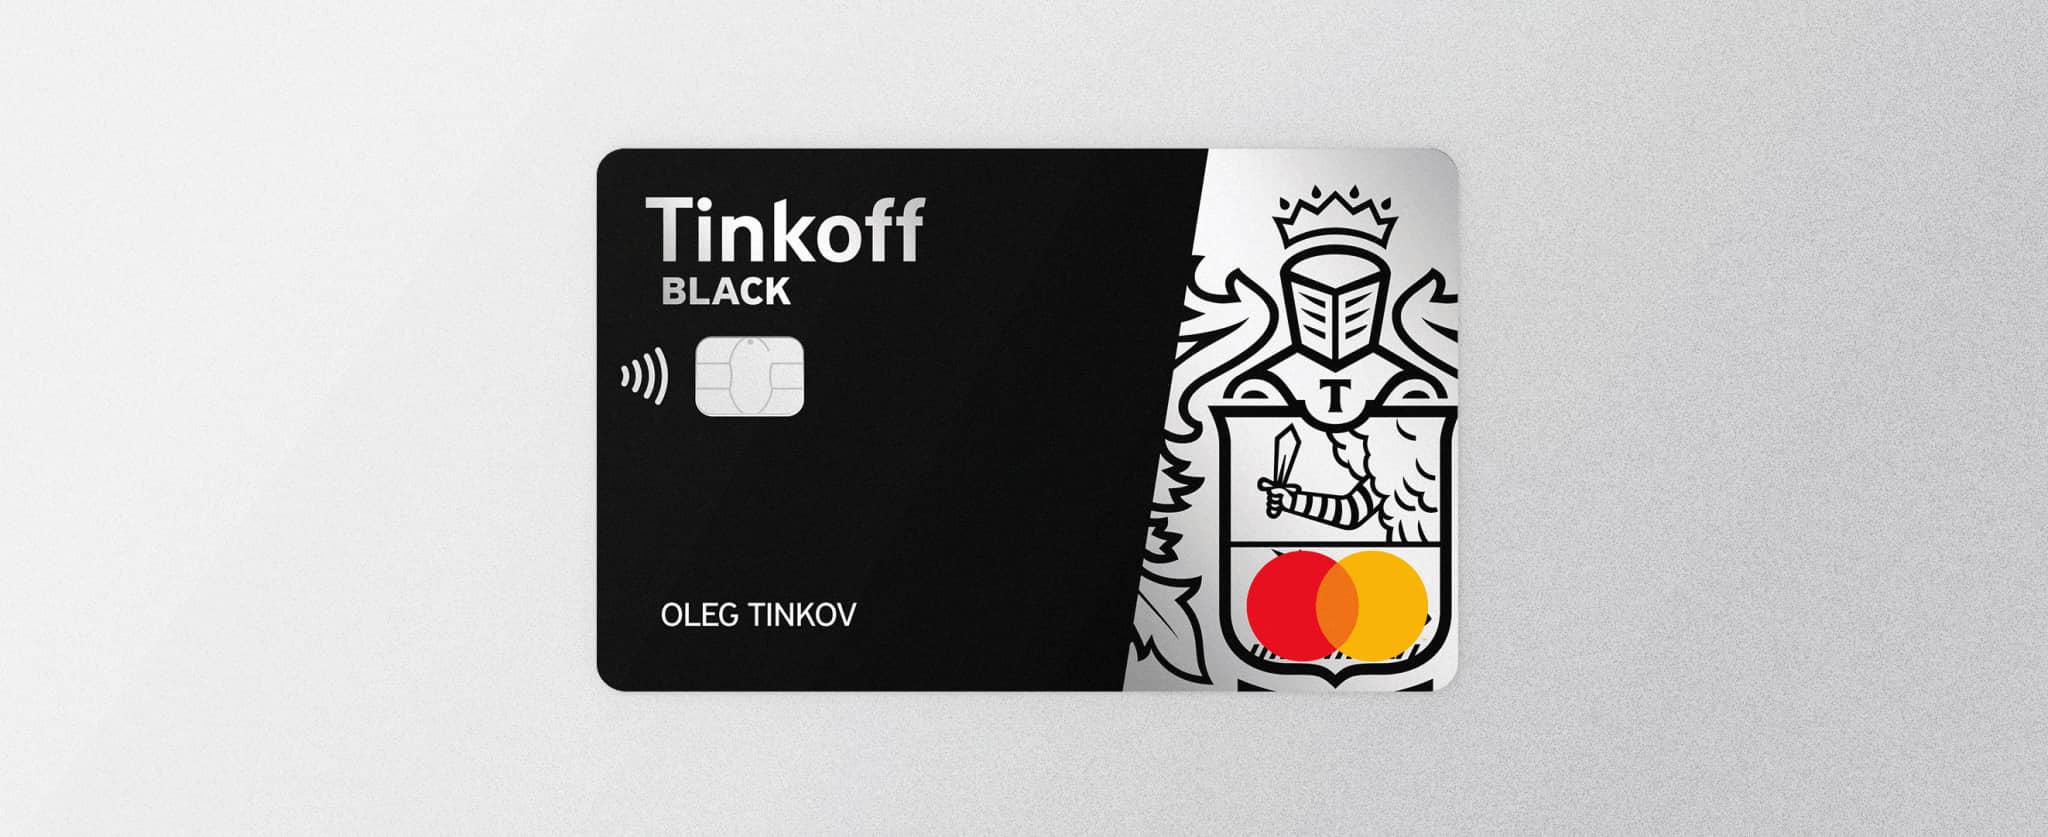 Tinkoff Black